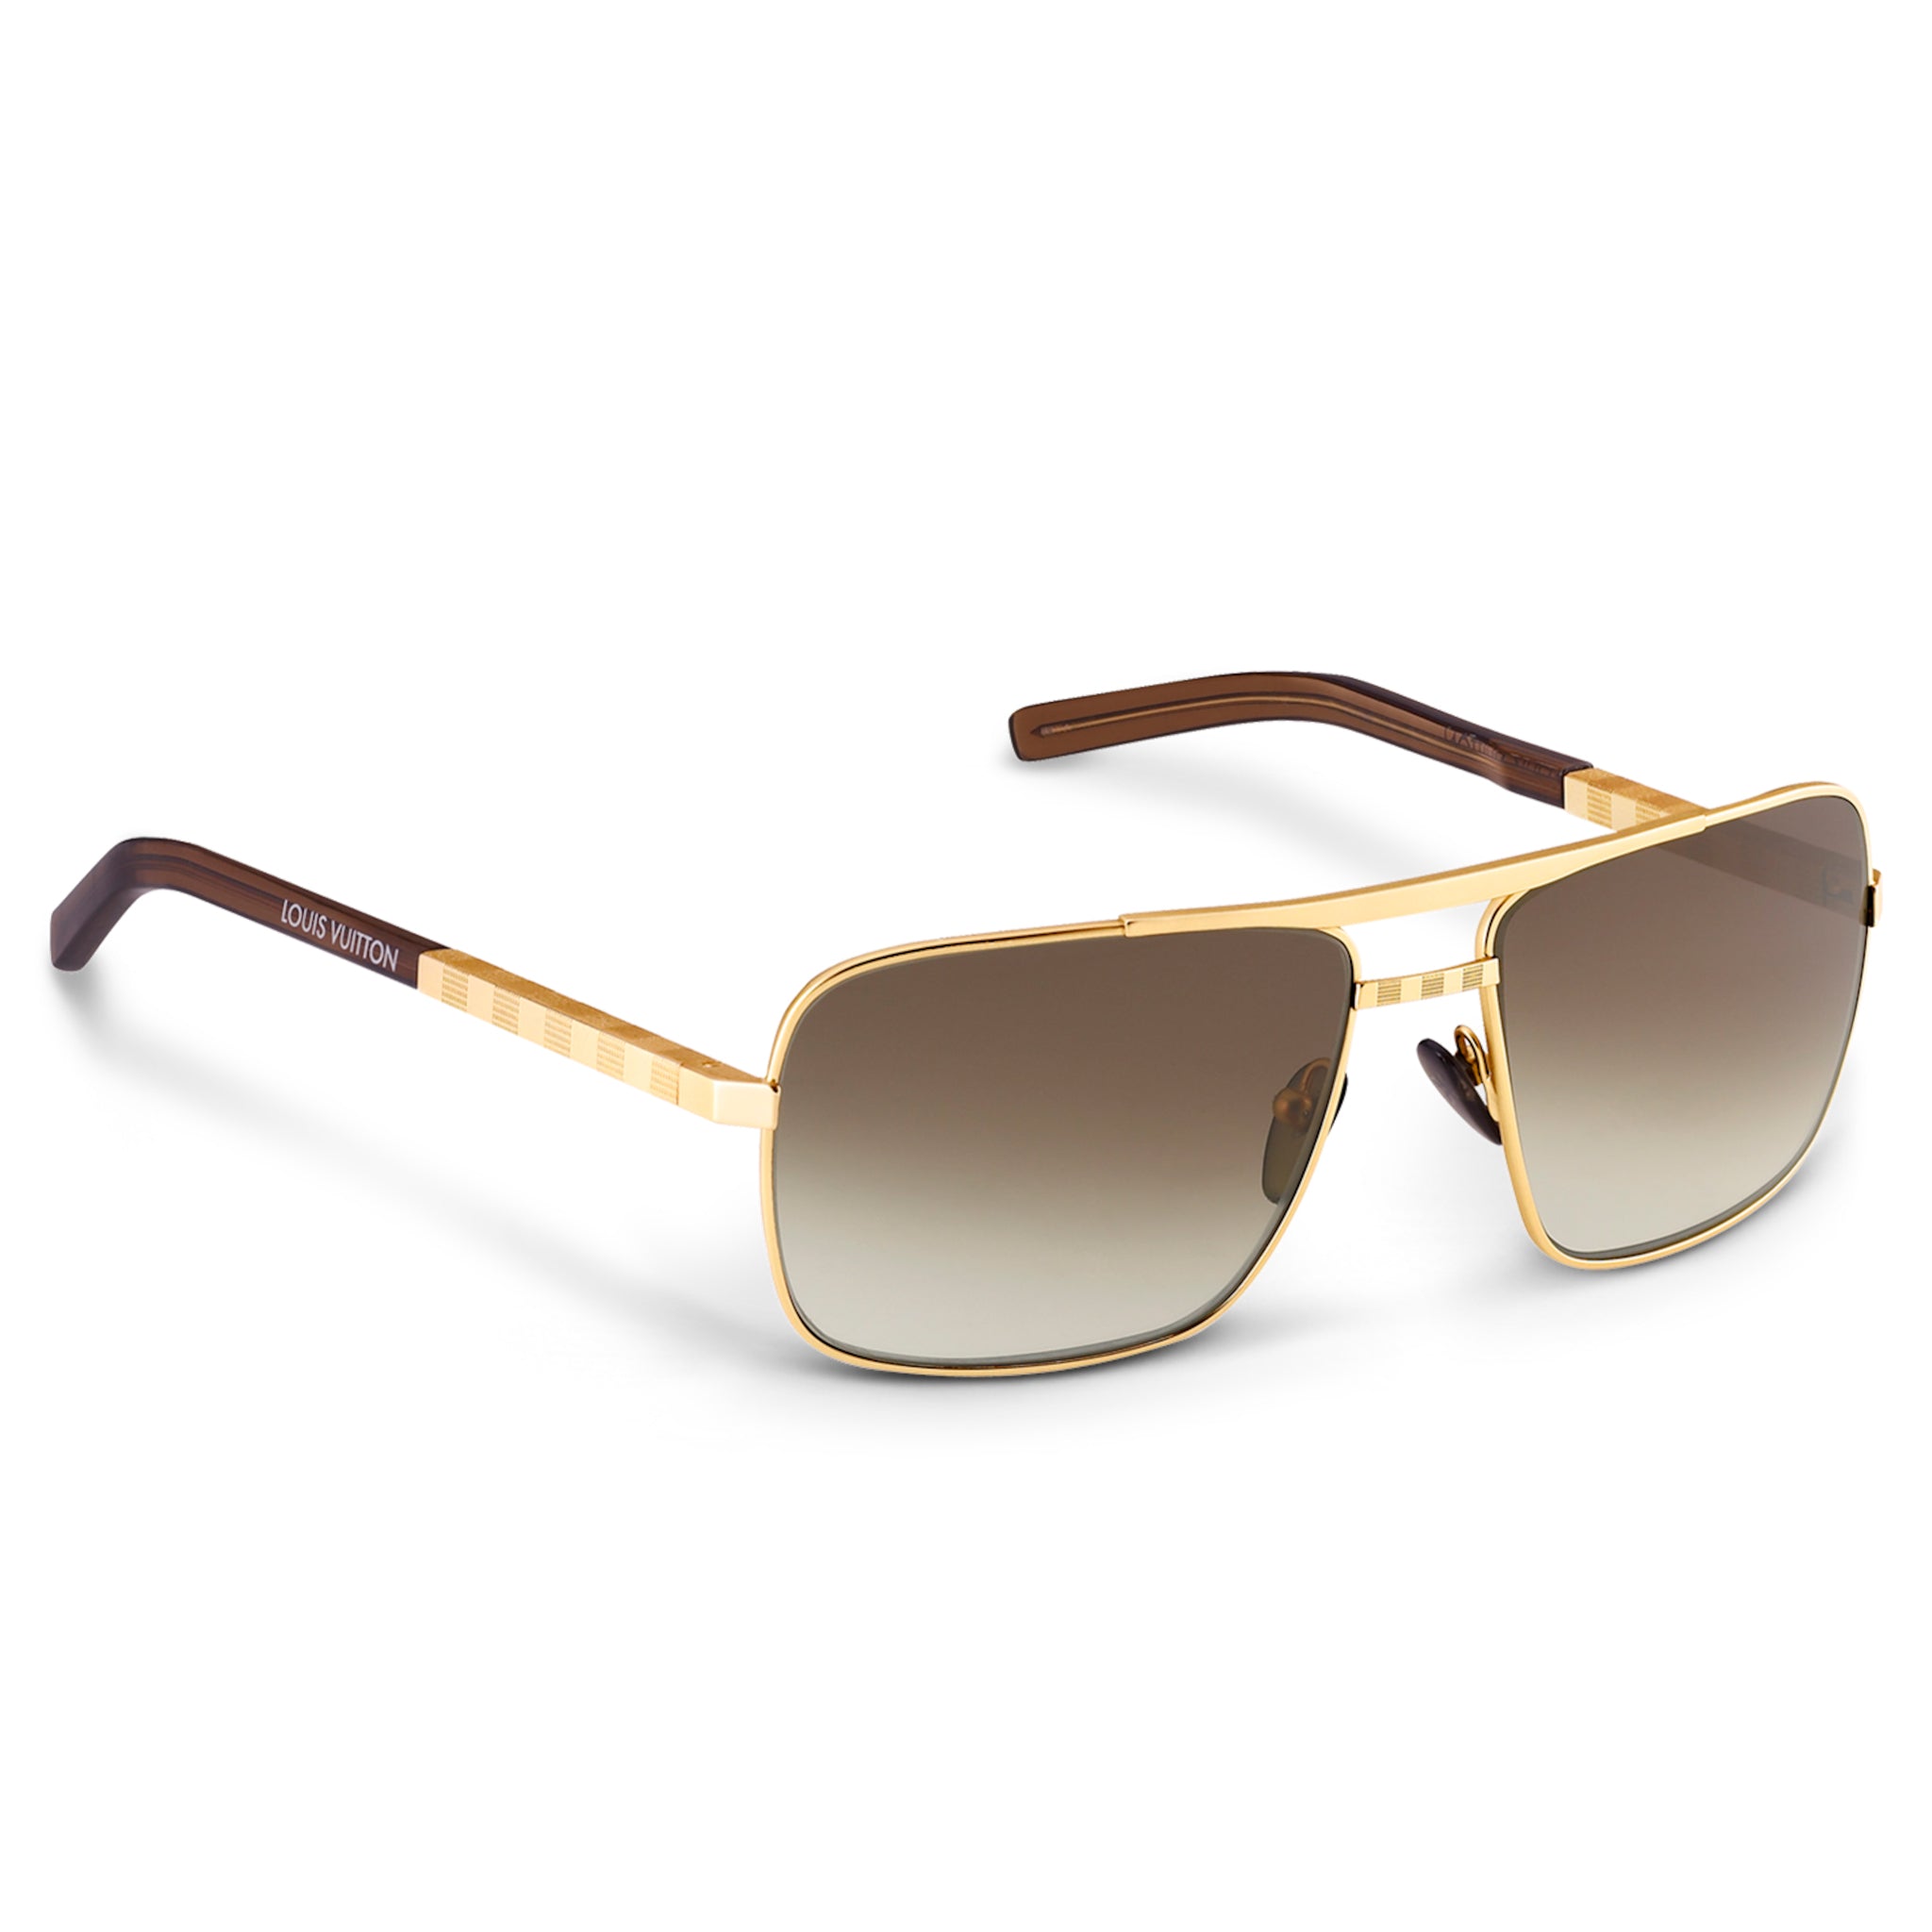 Mens Louis Vuitton Sunglasses Gold Attitude